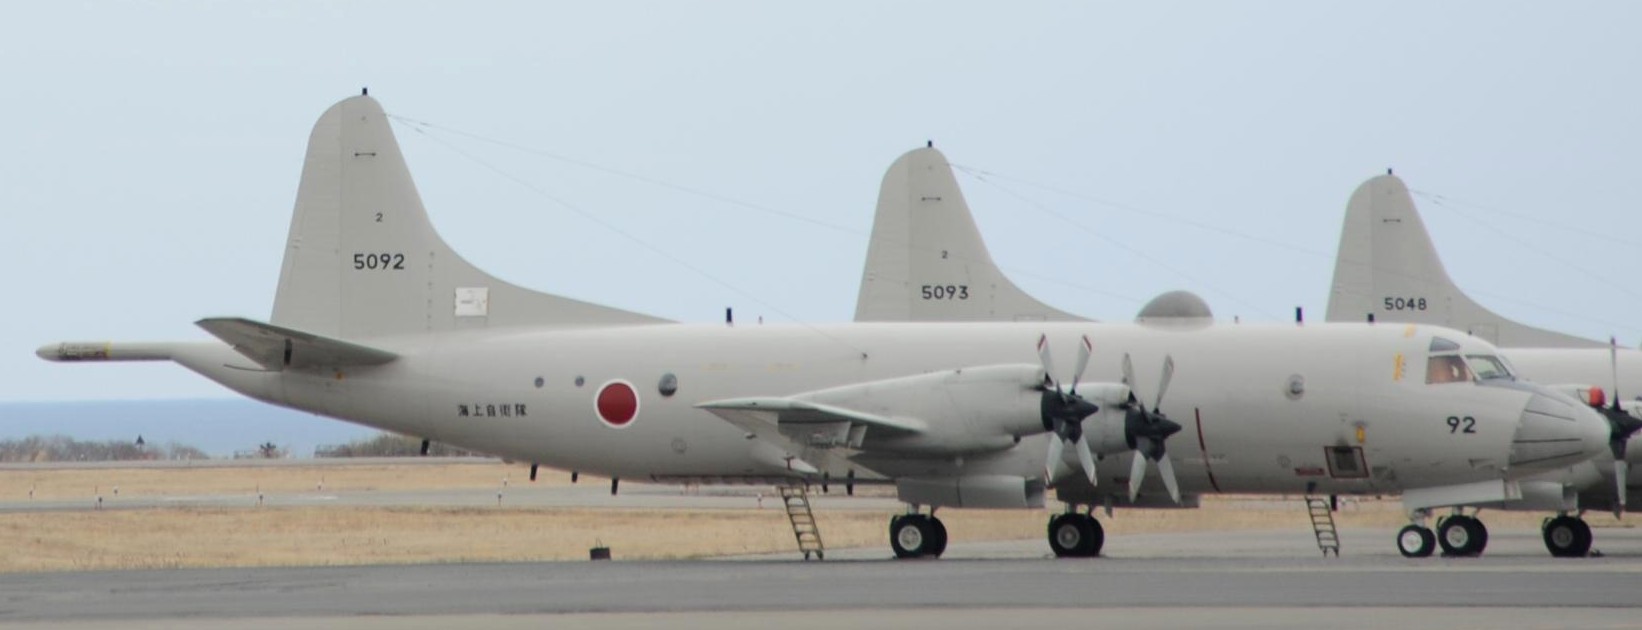 kawasaki p-3c orion patrol aircraft mpa japan maritime self defense force jmsdf 5092 03